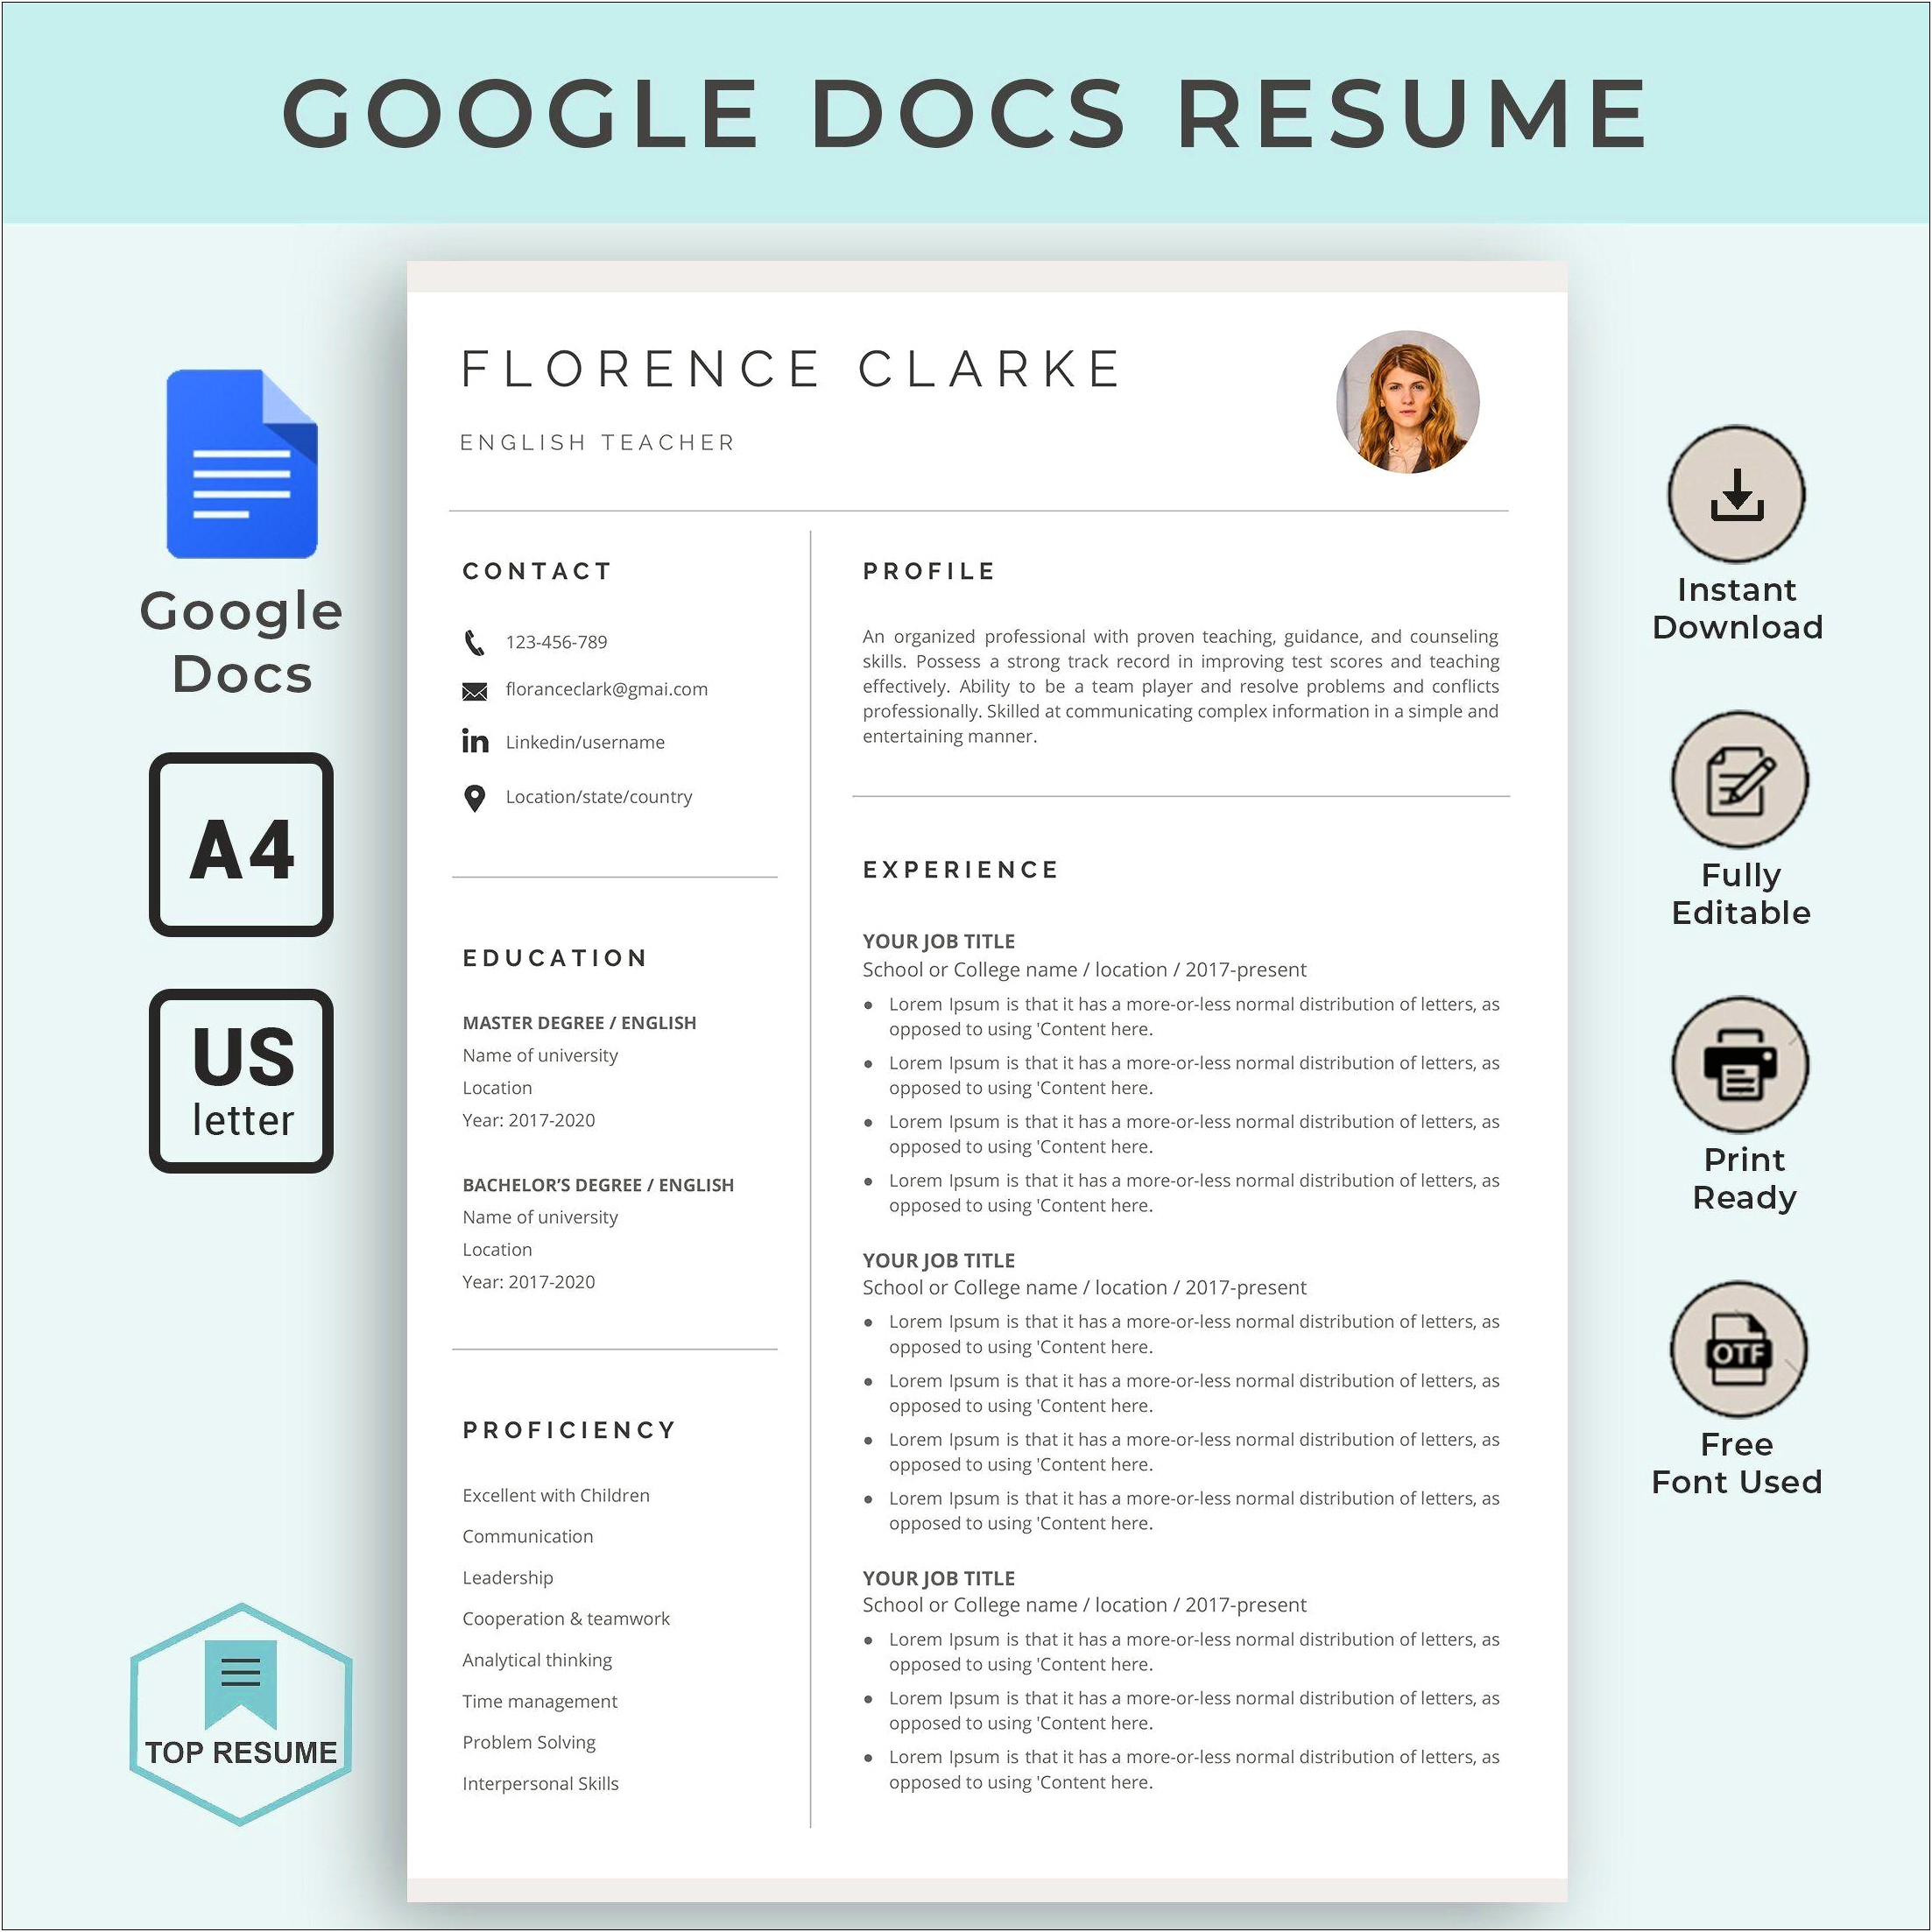 Best Google Docs Resume Fonts